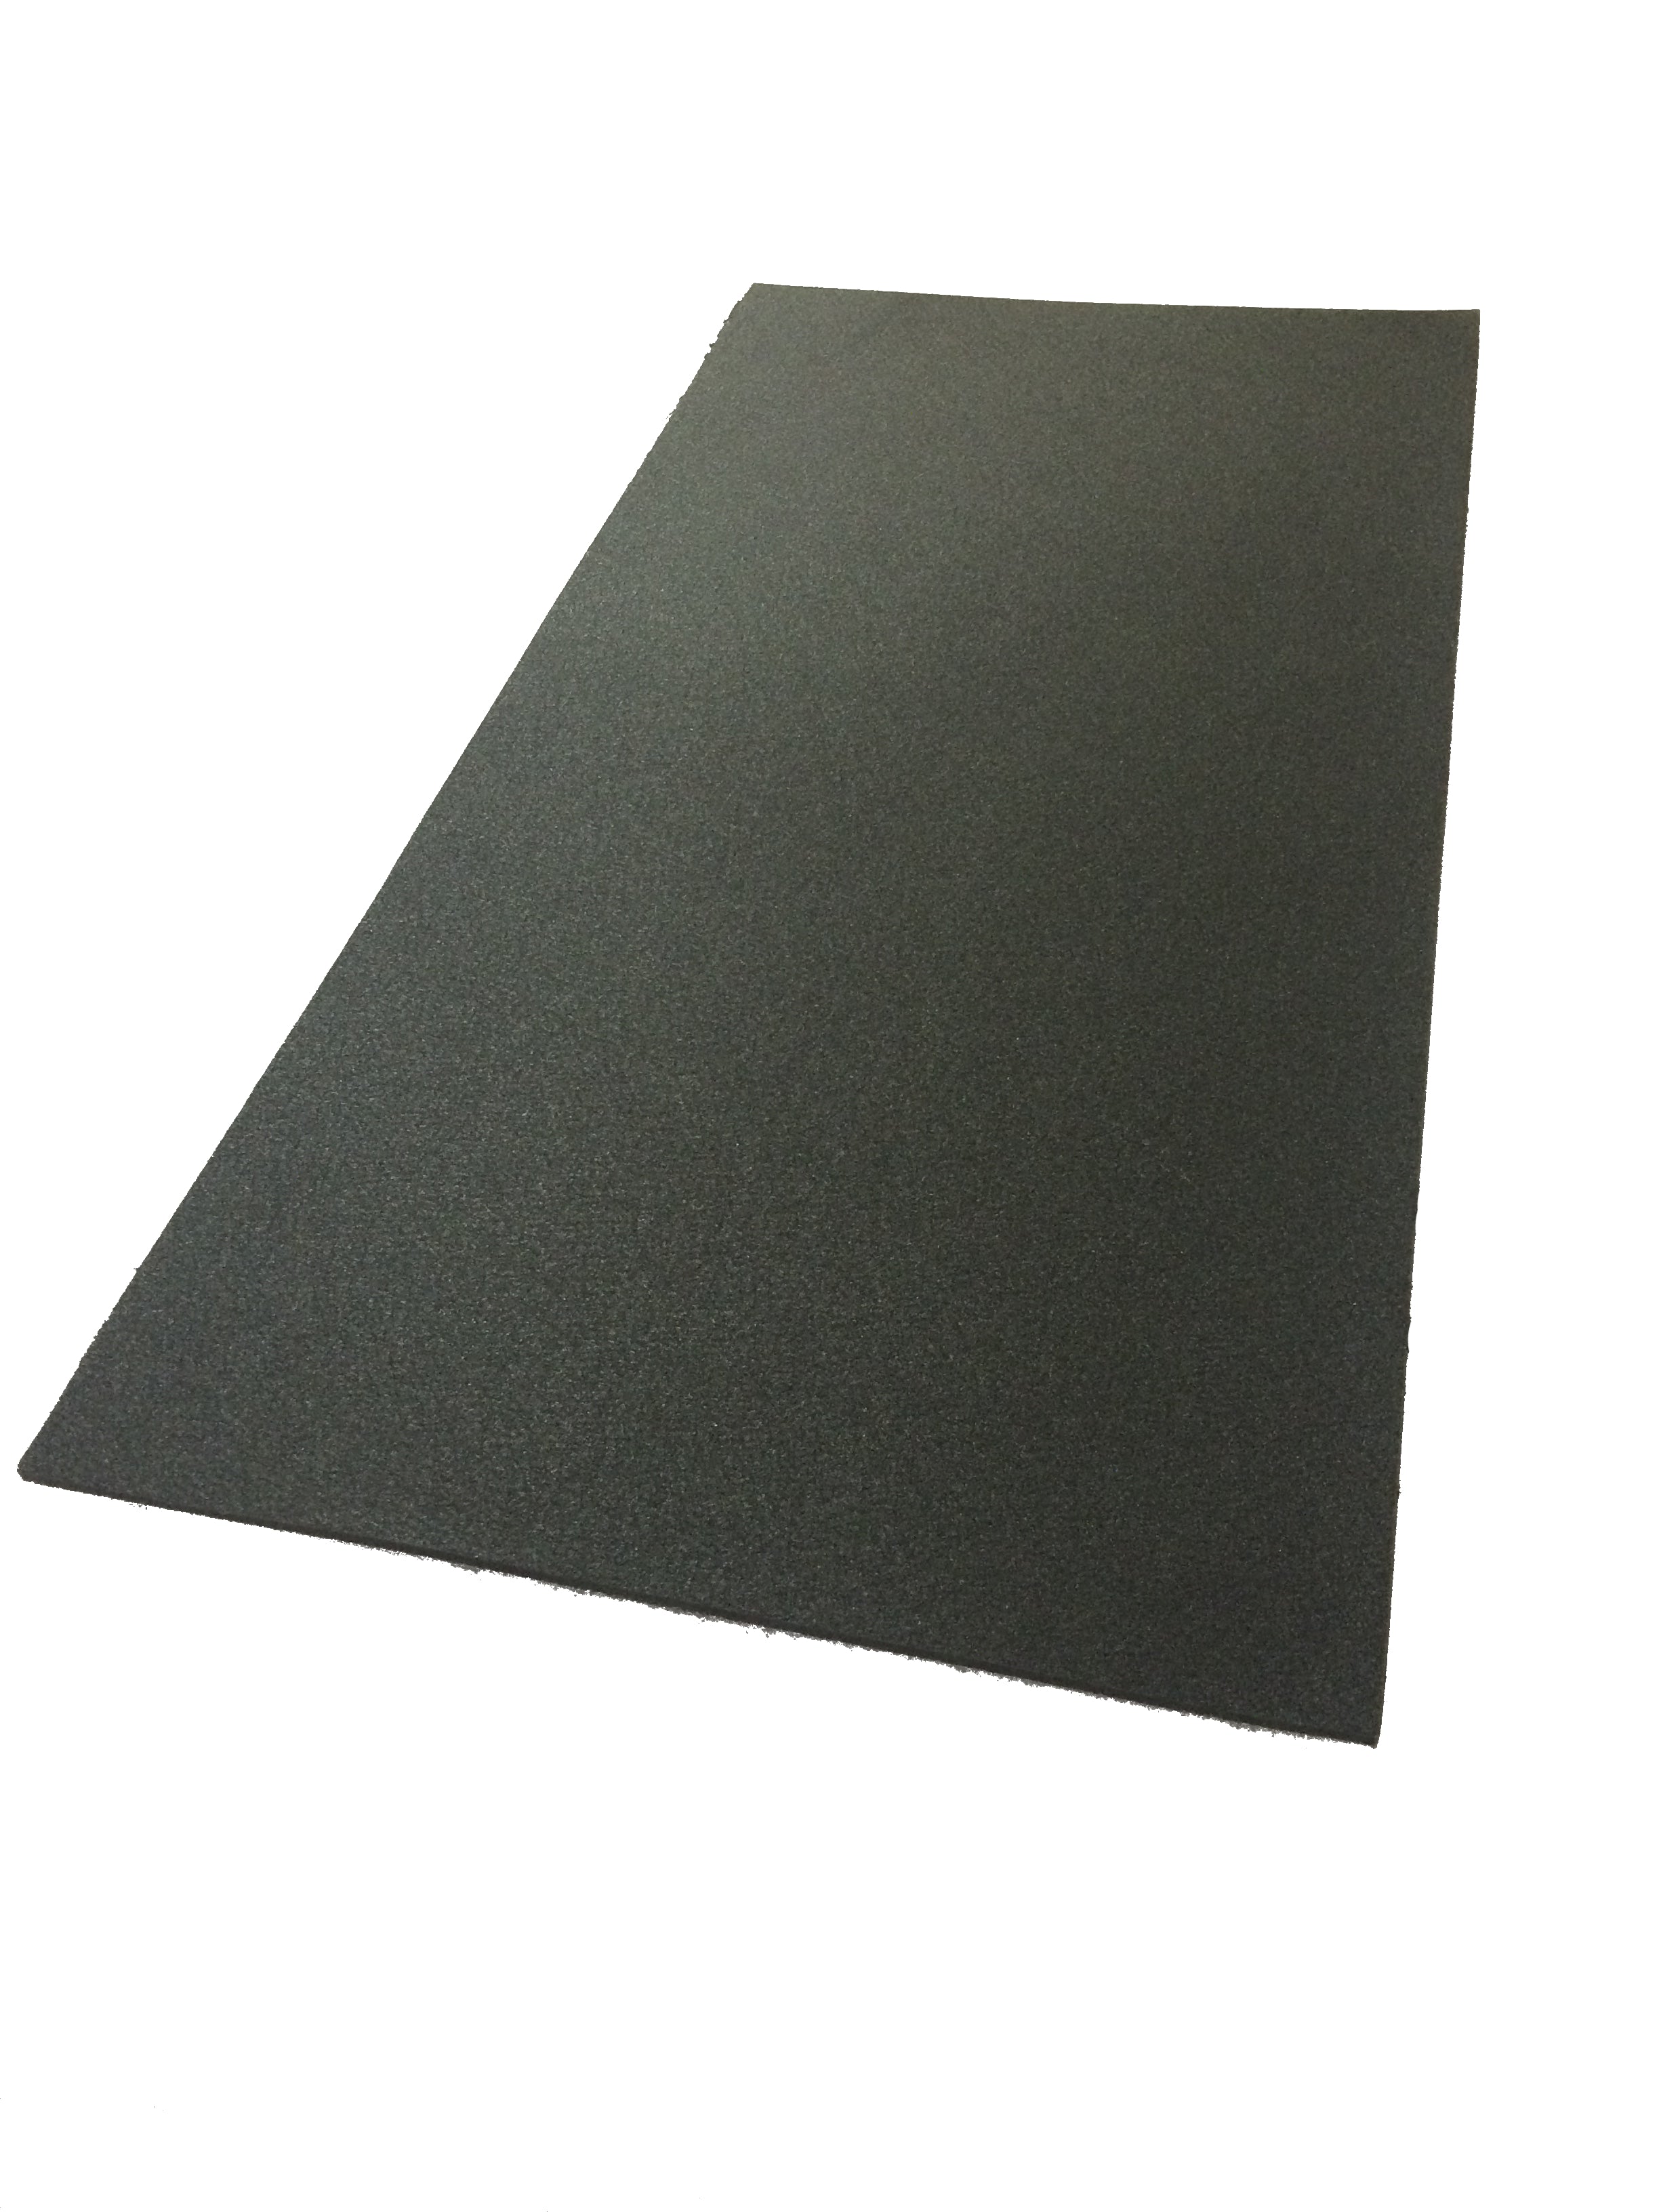 Silent Floor Ultra Acoustic Underlay - 100 Sheets - 72sqm - Advanced Acoustics